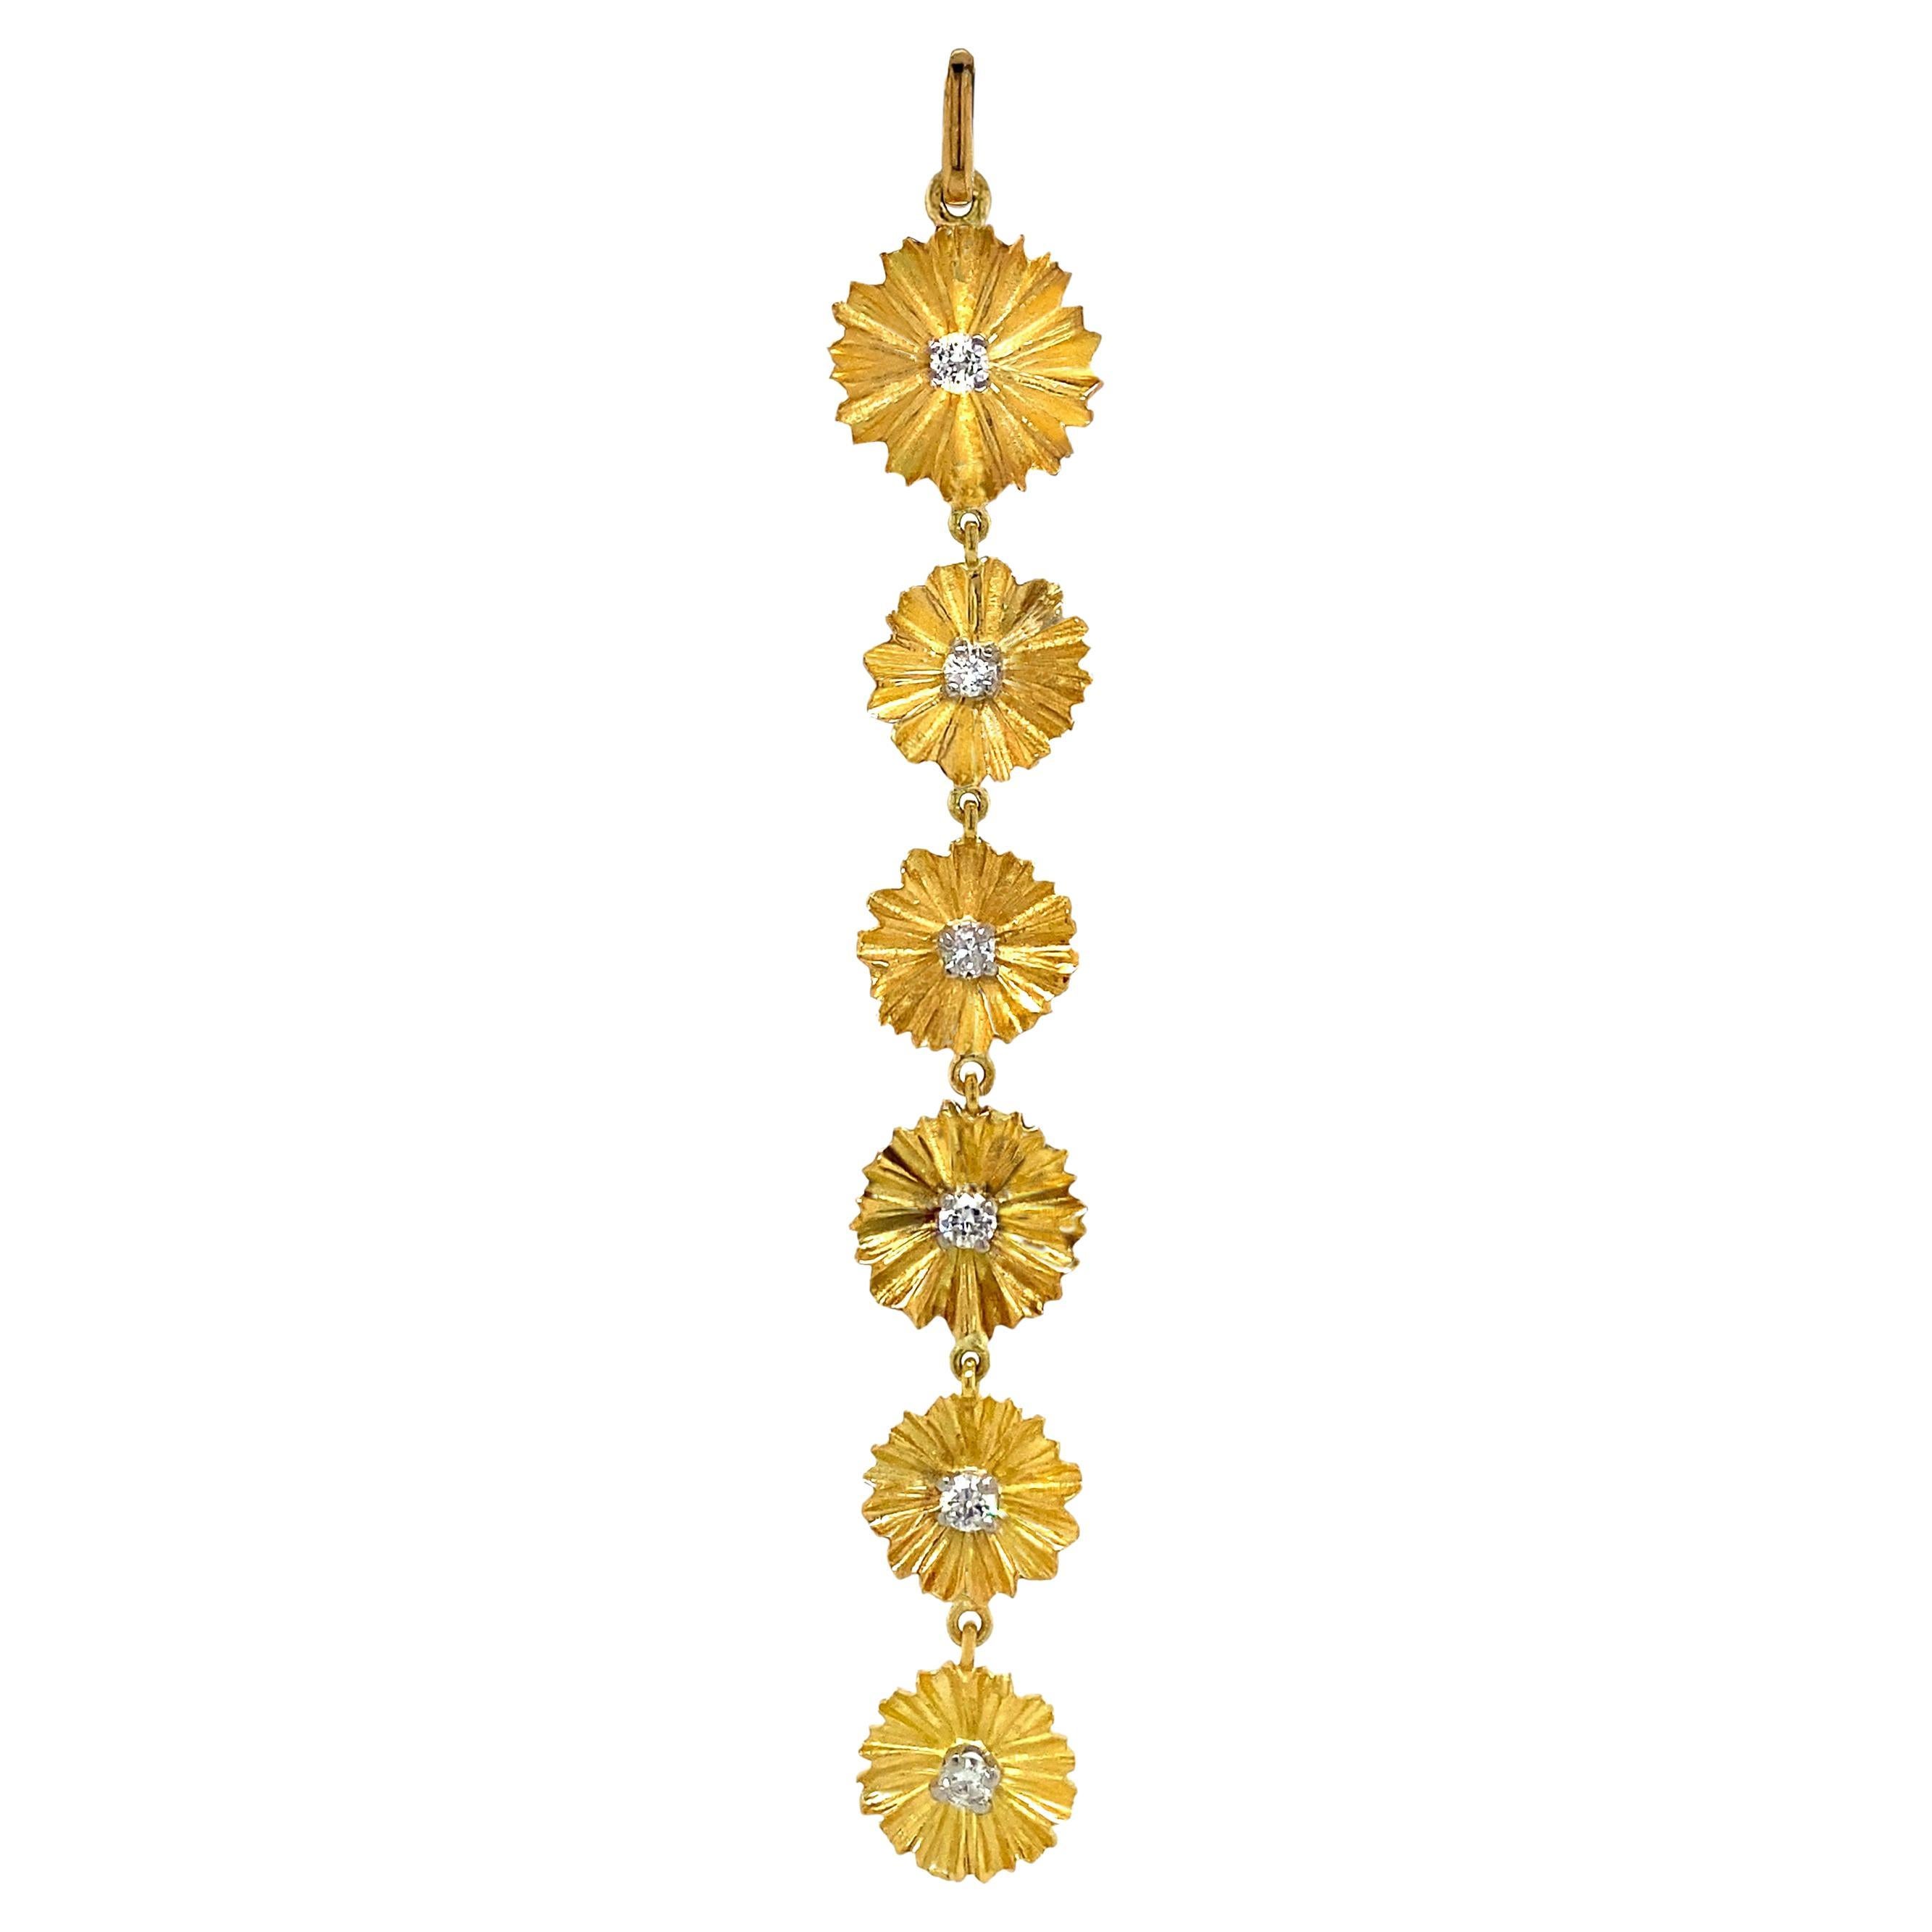 0.50 Carat "Daisy Chain" Diamond Drop Link Pendant in 18 Karat Yellow Gold